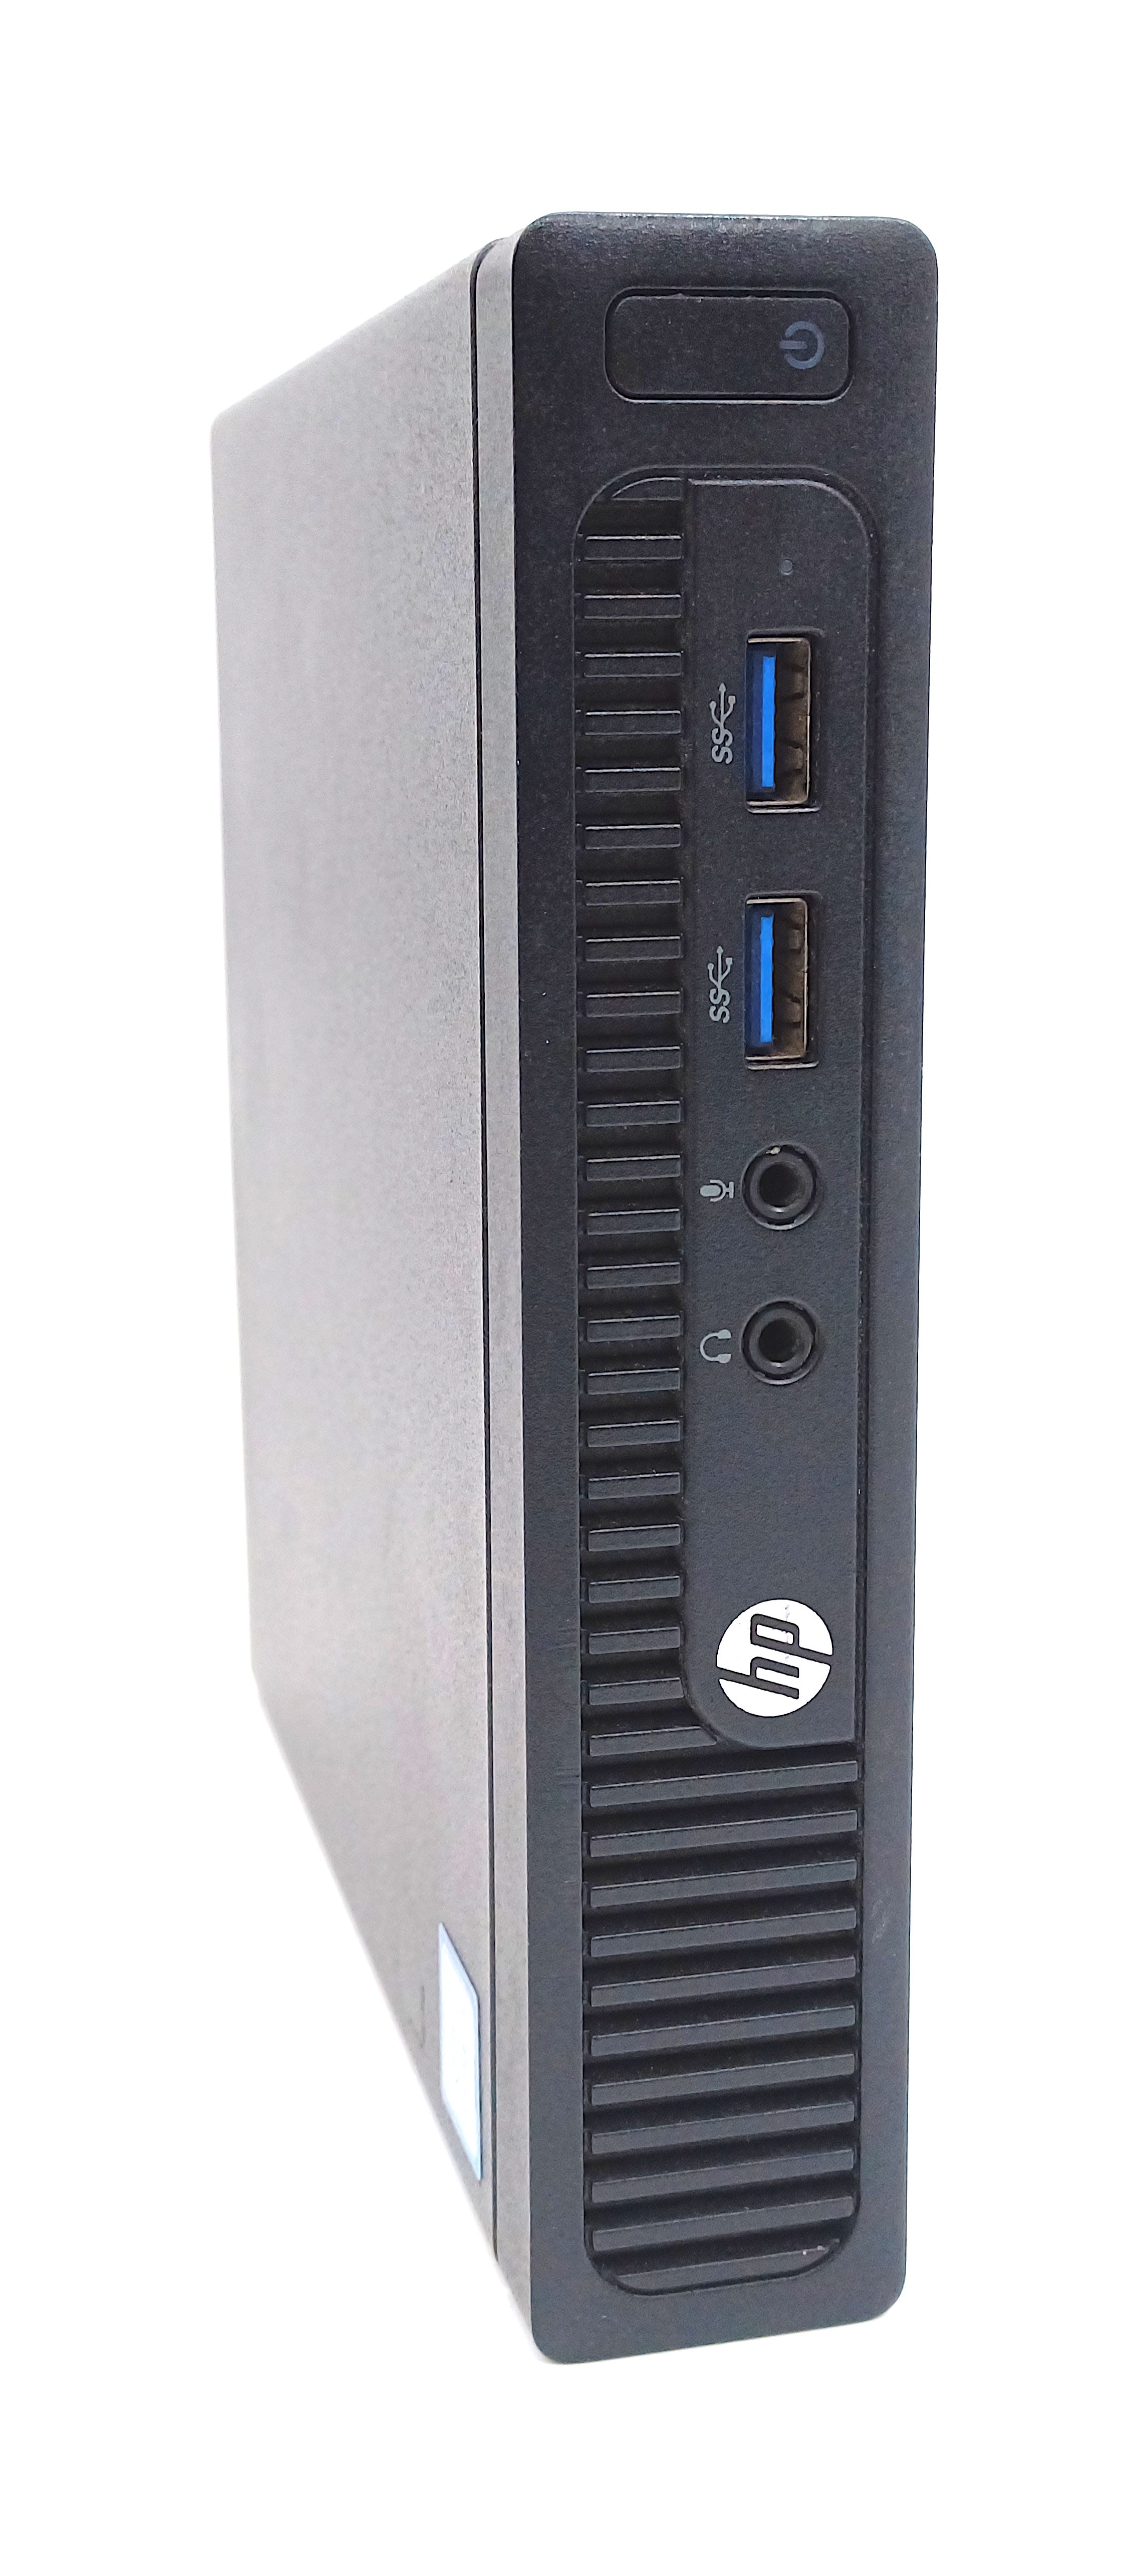 HP 260 G1 Desktop Micro PC, Core i5 4th Gen, 8GB RAM, 128GB SSD